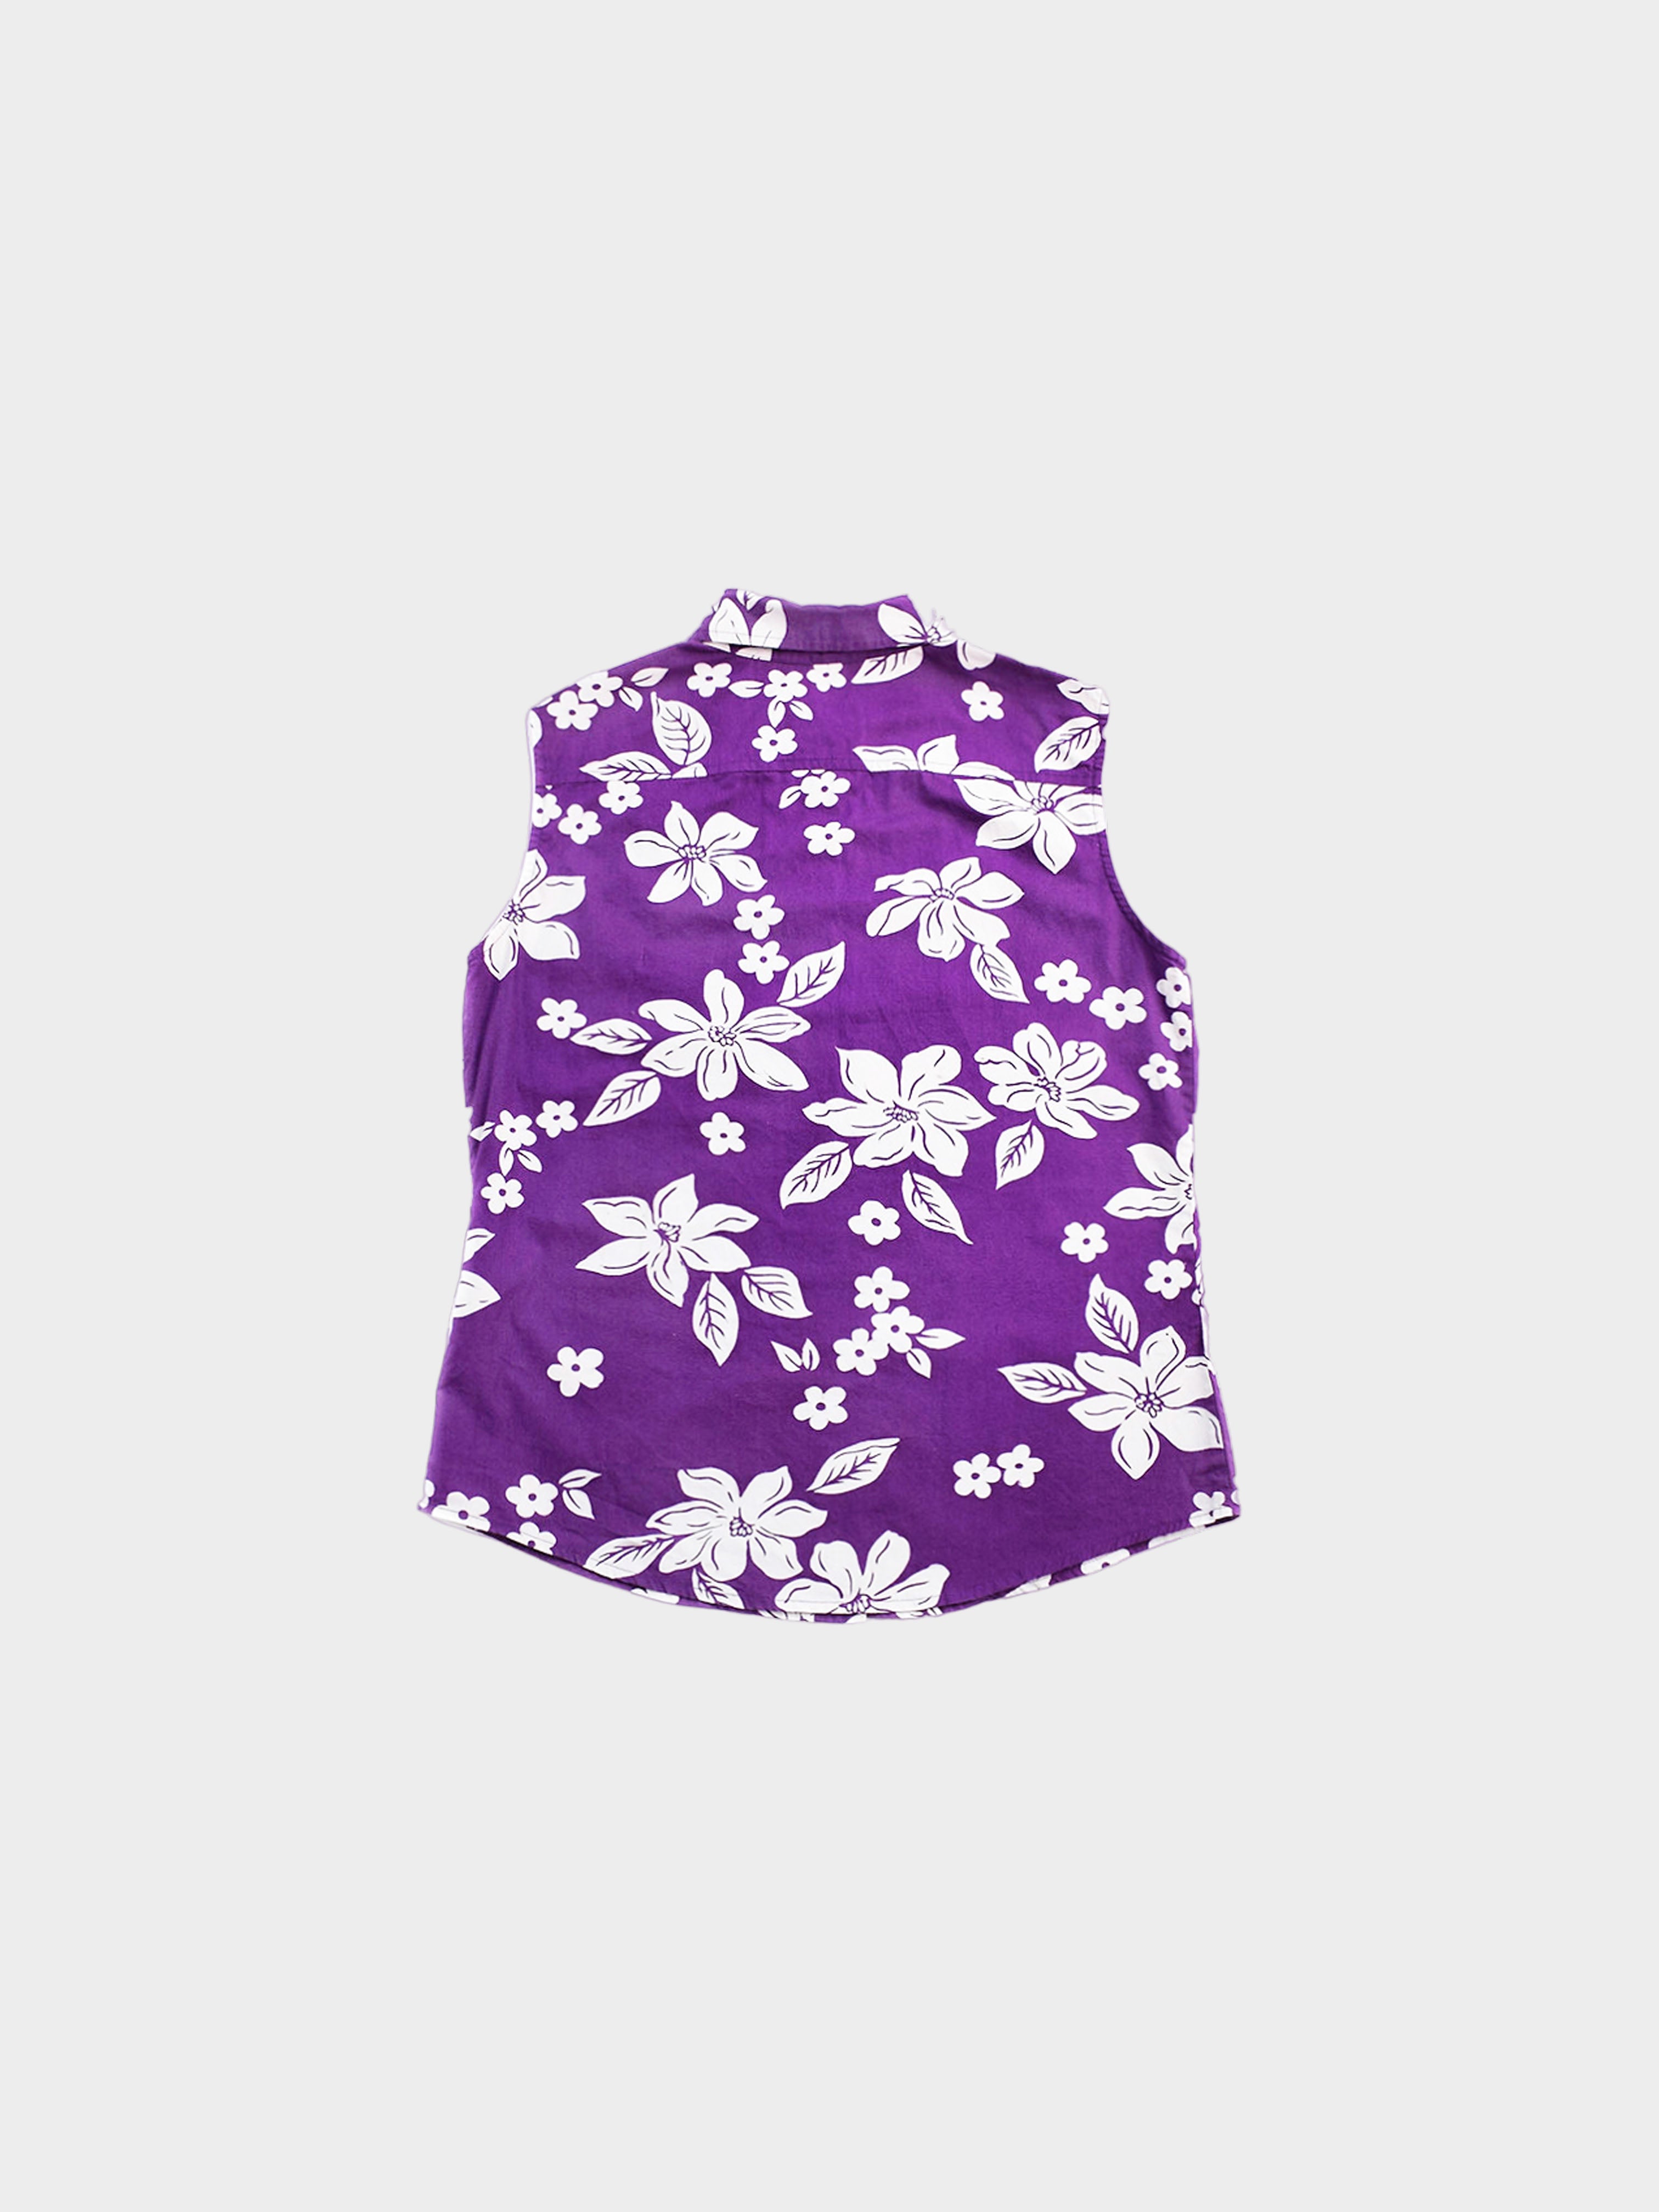 Miu Miu SS 2003 Purple Floral Buttoned Up Top